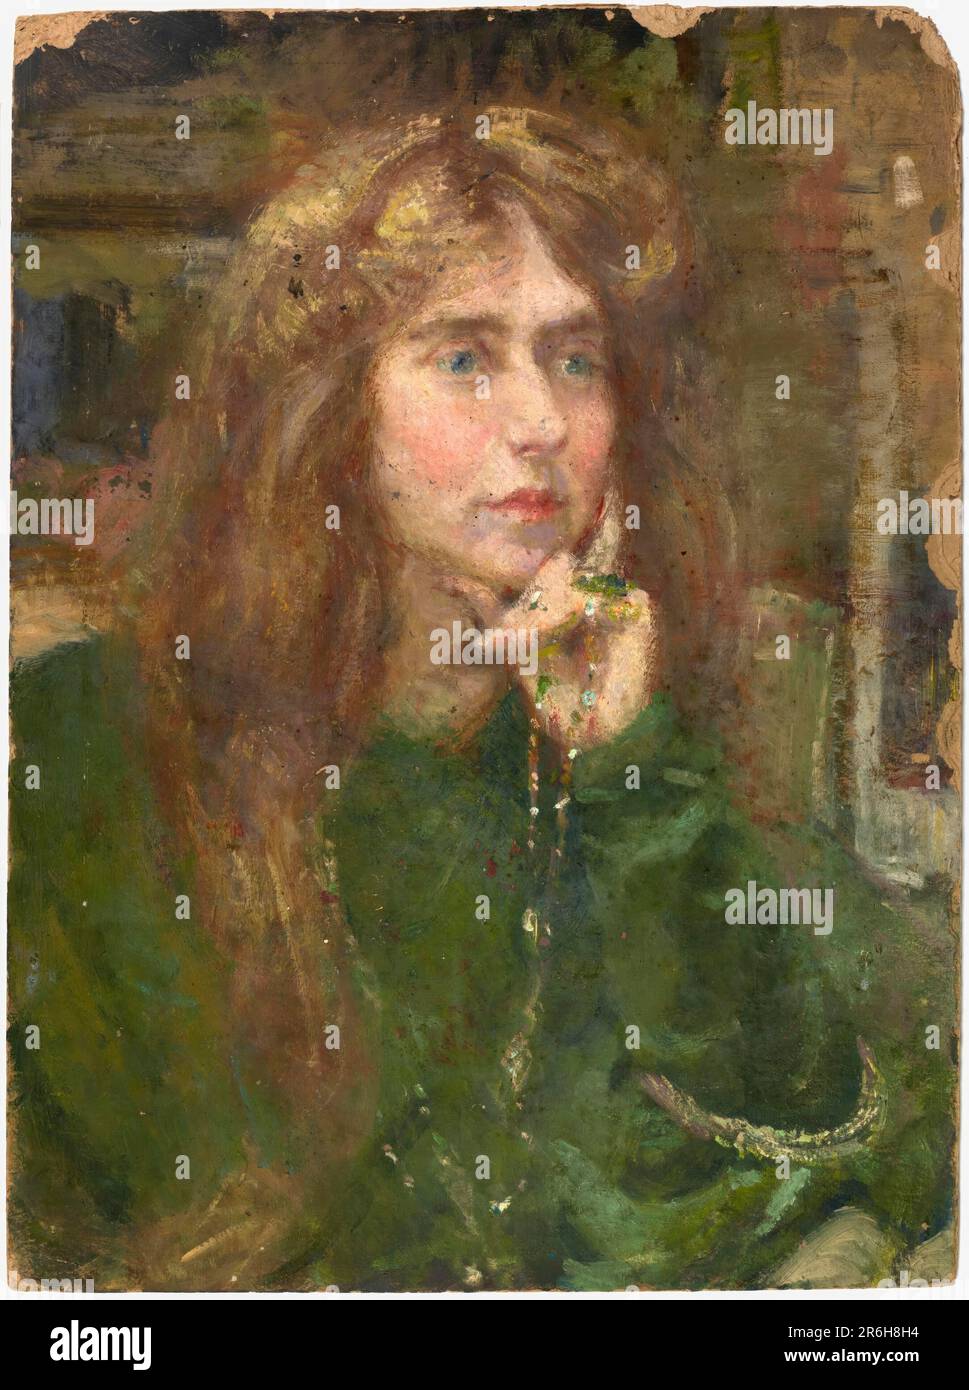 Natalie con collana. Data: CA. 1900. olio su cartone. Museo: Smithsonian American Art Museum. Natalie Clifford Barney. Foto Stock